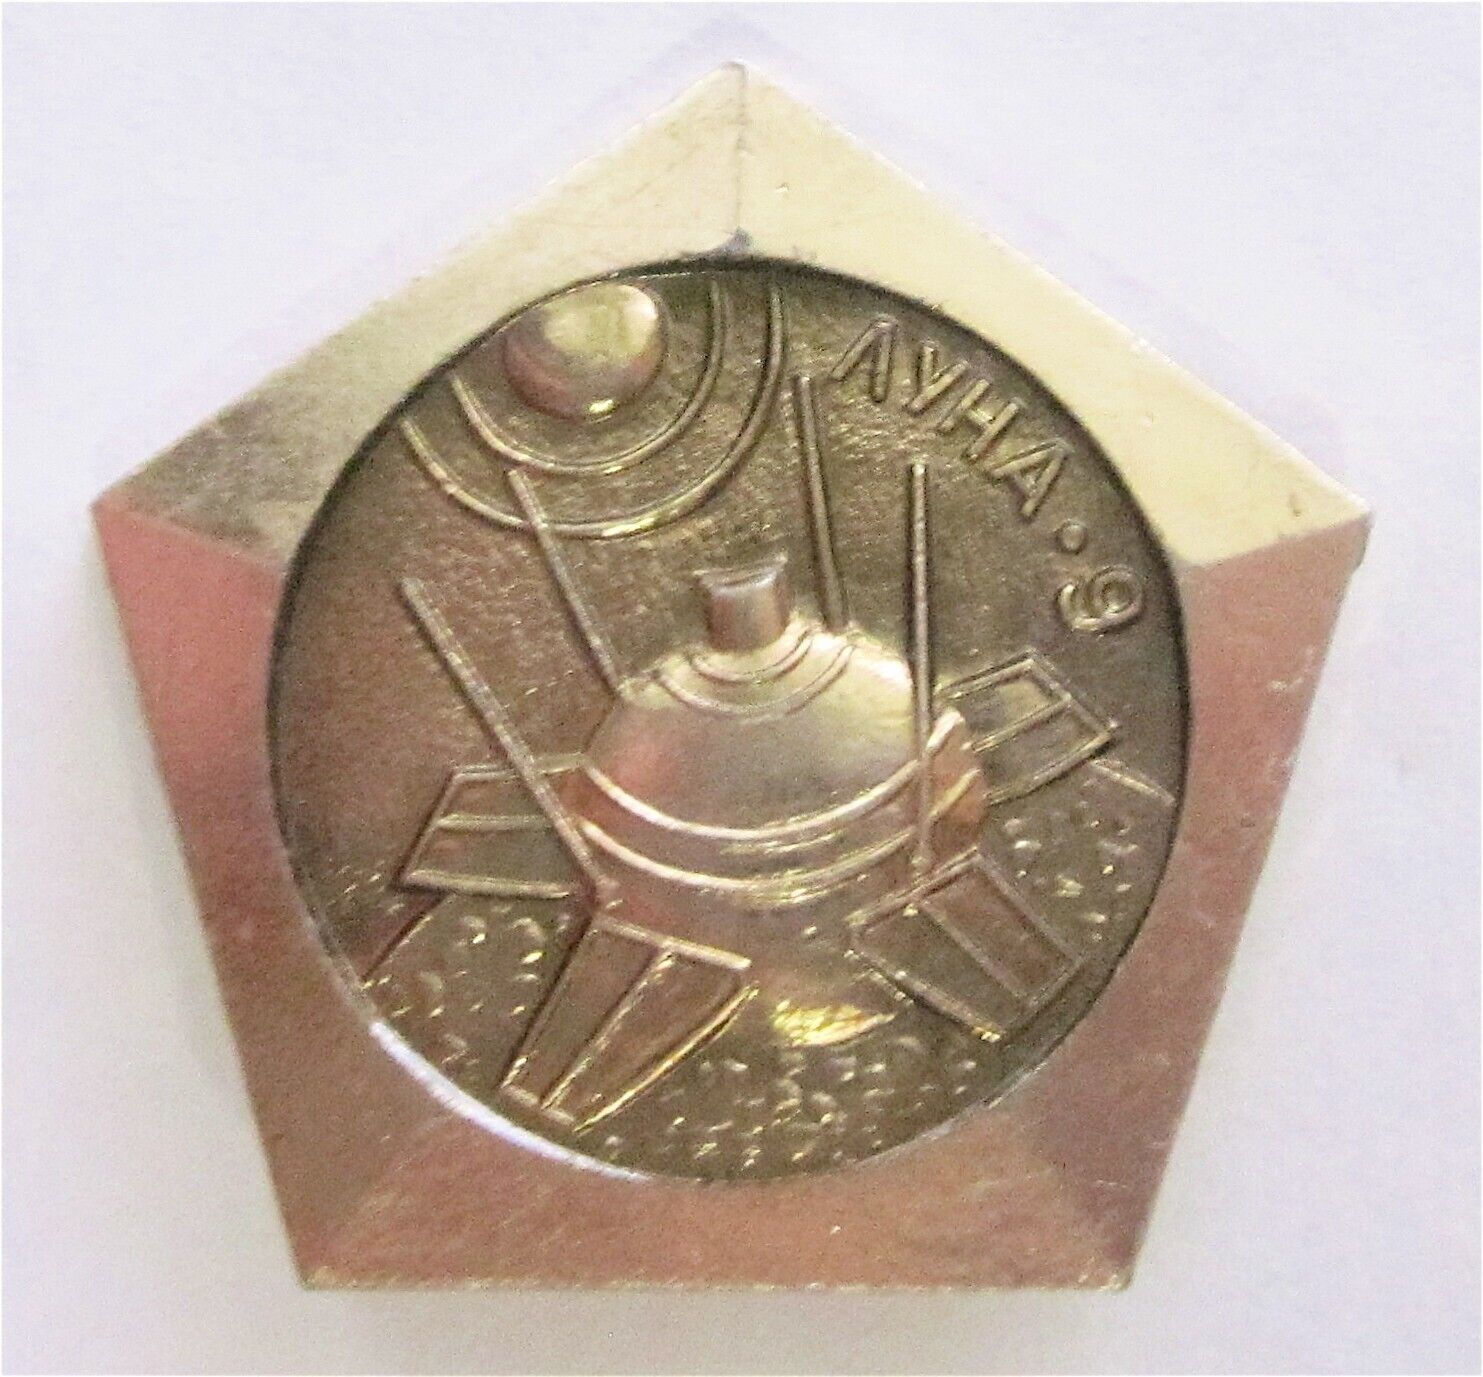 USSR SPACE PROGRAM, LUNA - 9, SOFT LANDING ON THE MOON JANUARY 31 1966 PIN